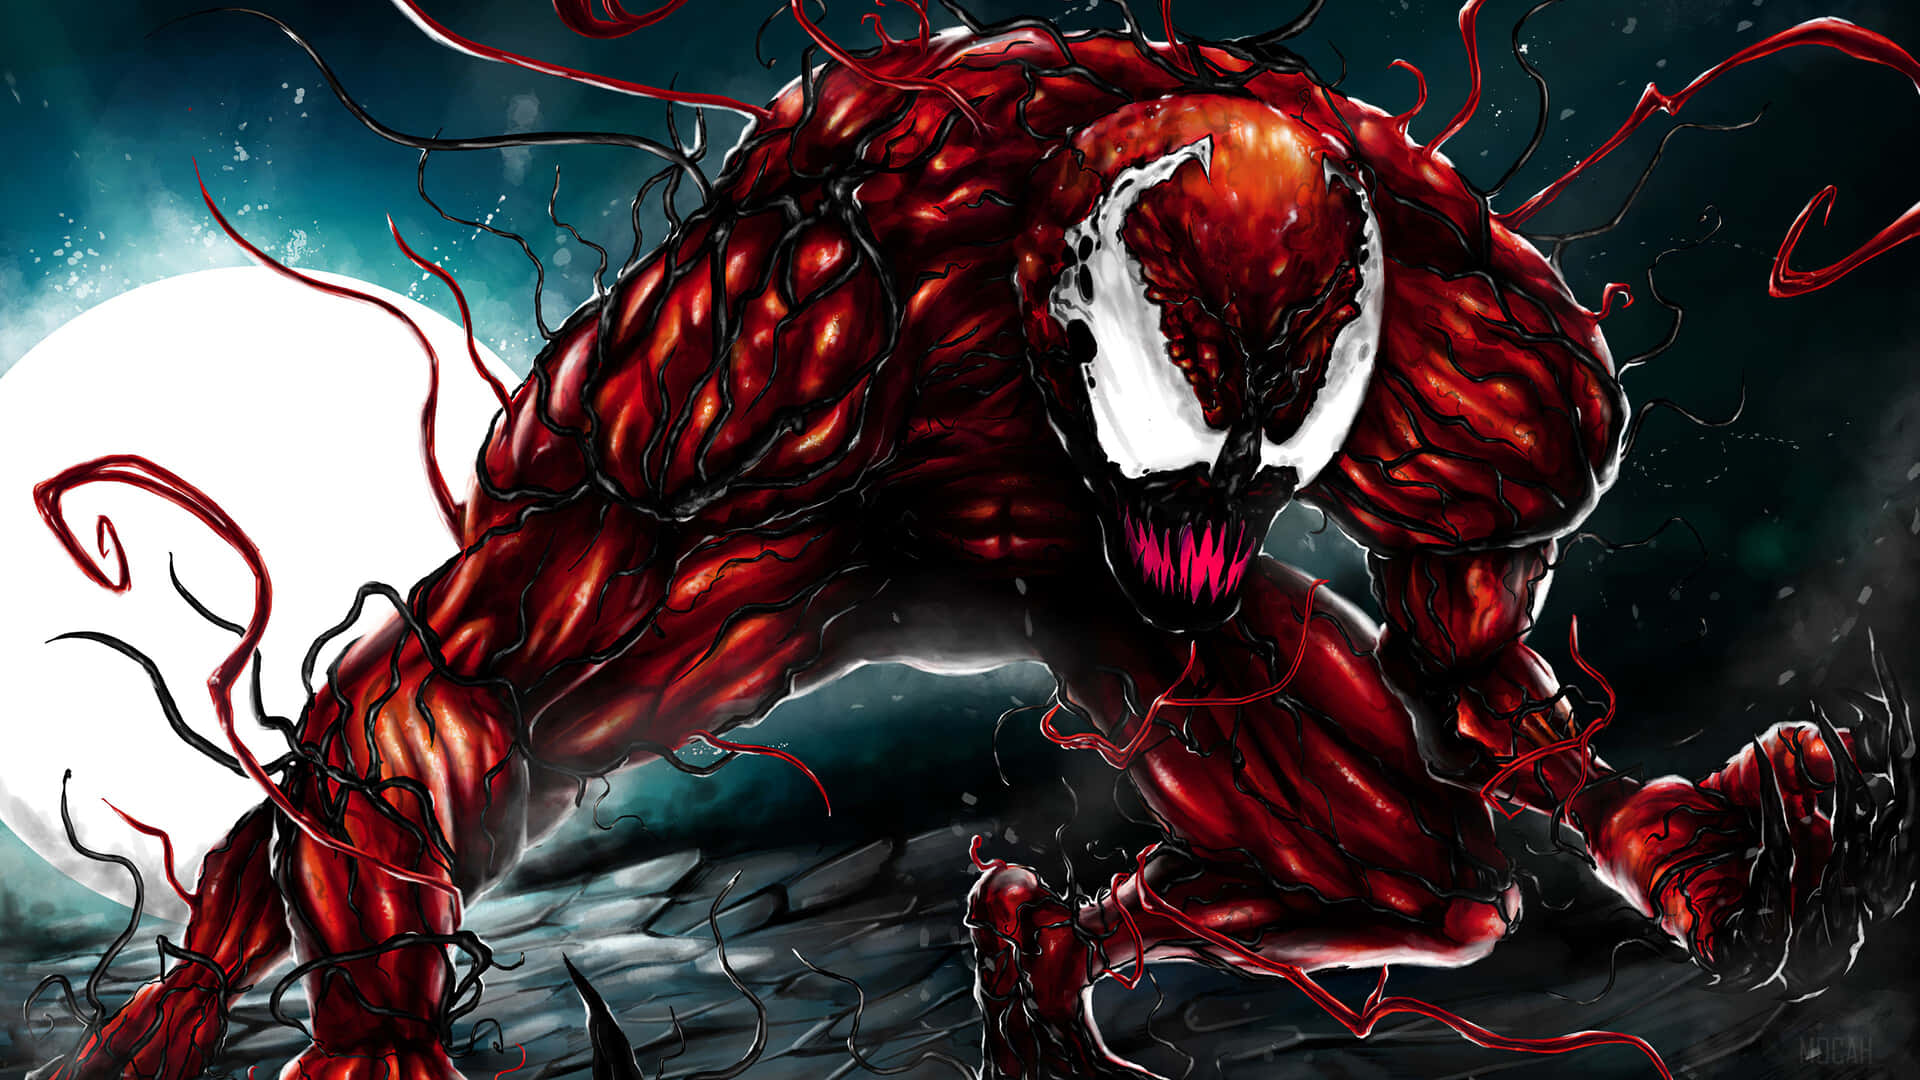 Feel the wrath of Venom's offspring, Carnage! Wallpaper